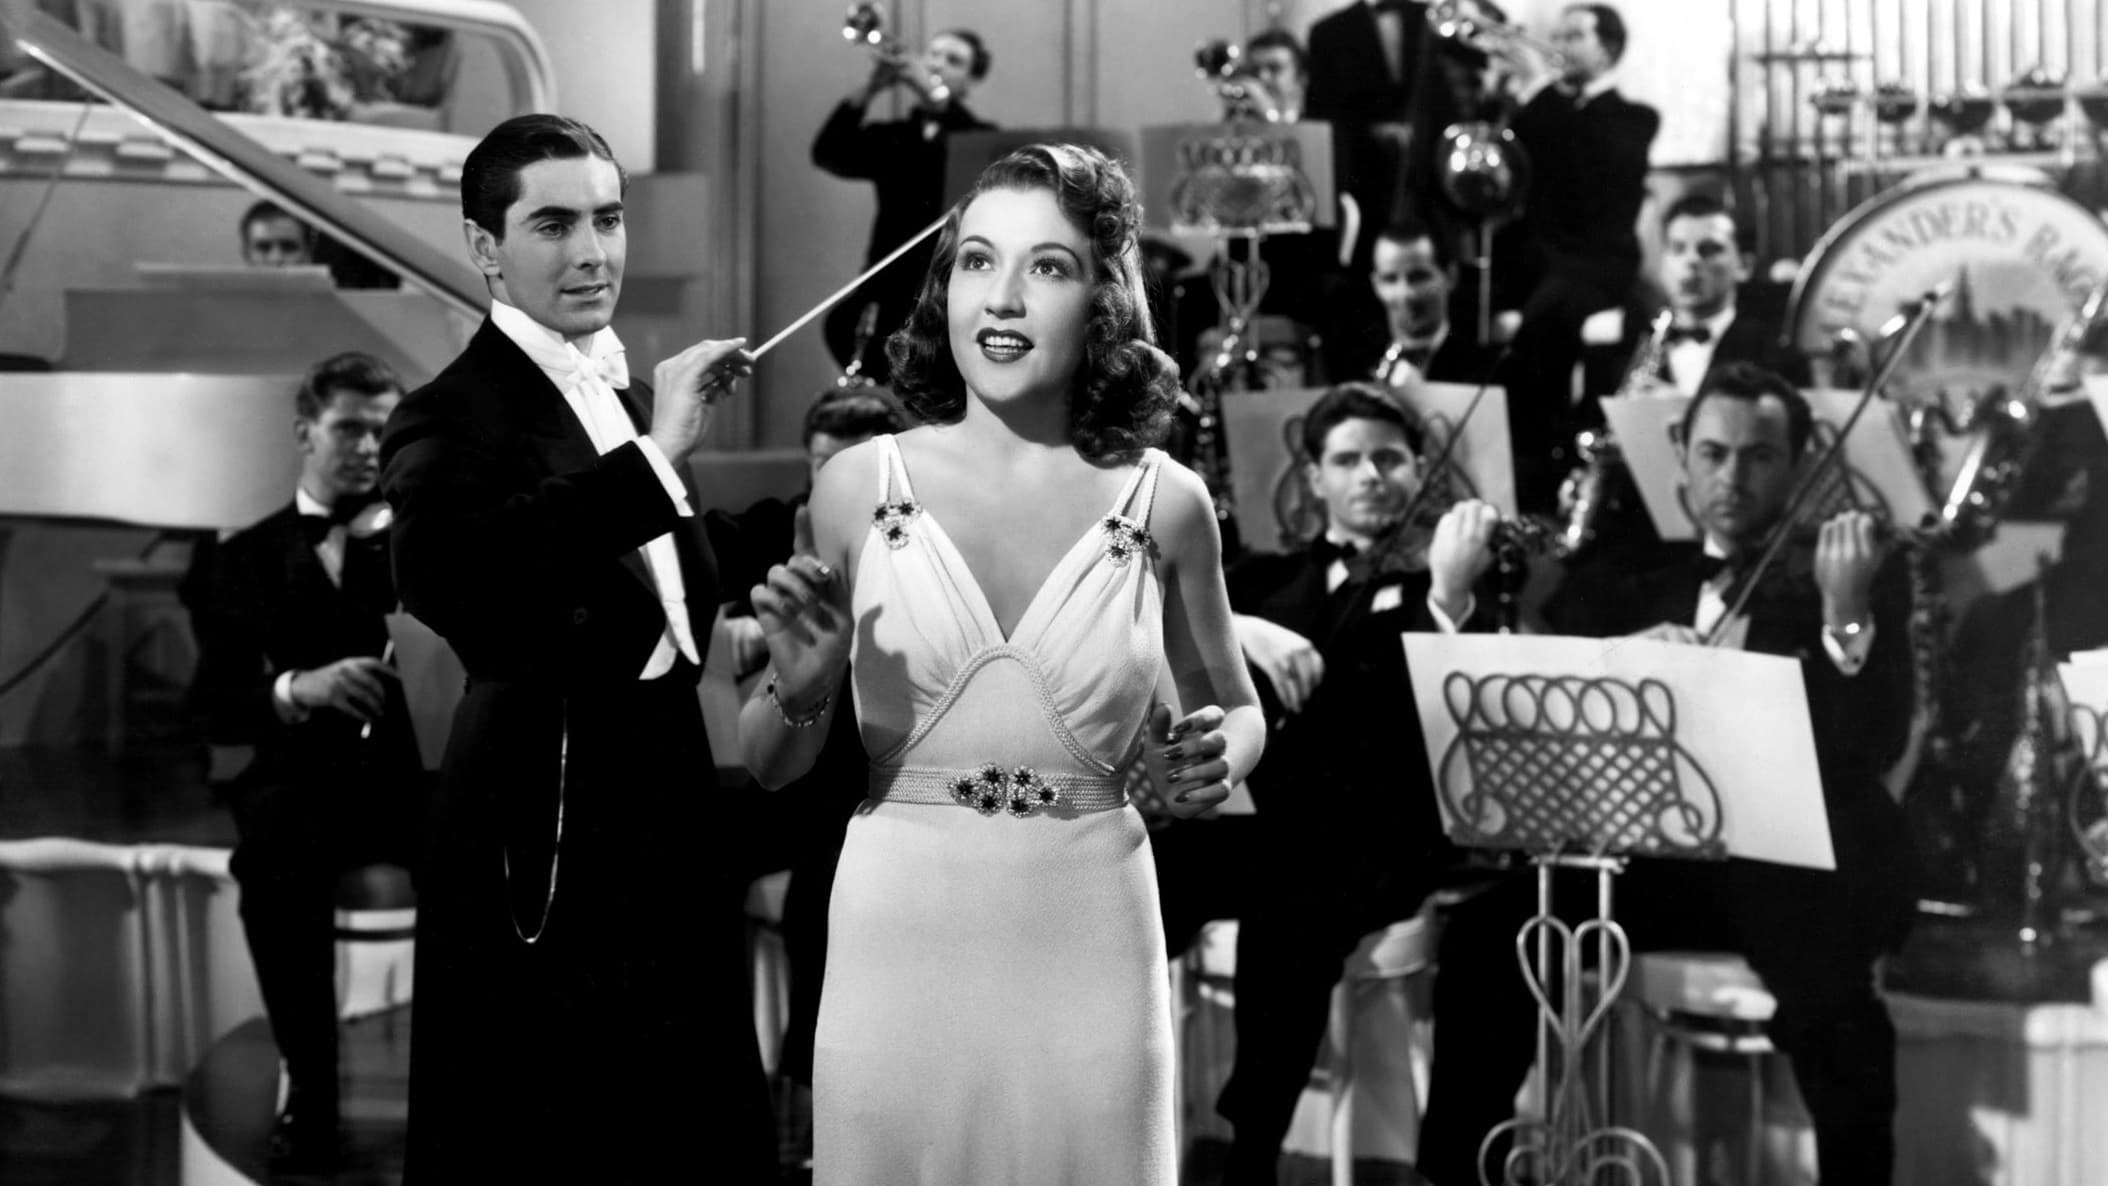 Alexander's Ragtime Band (1938)